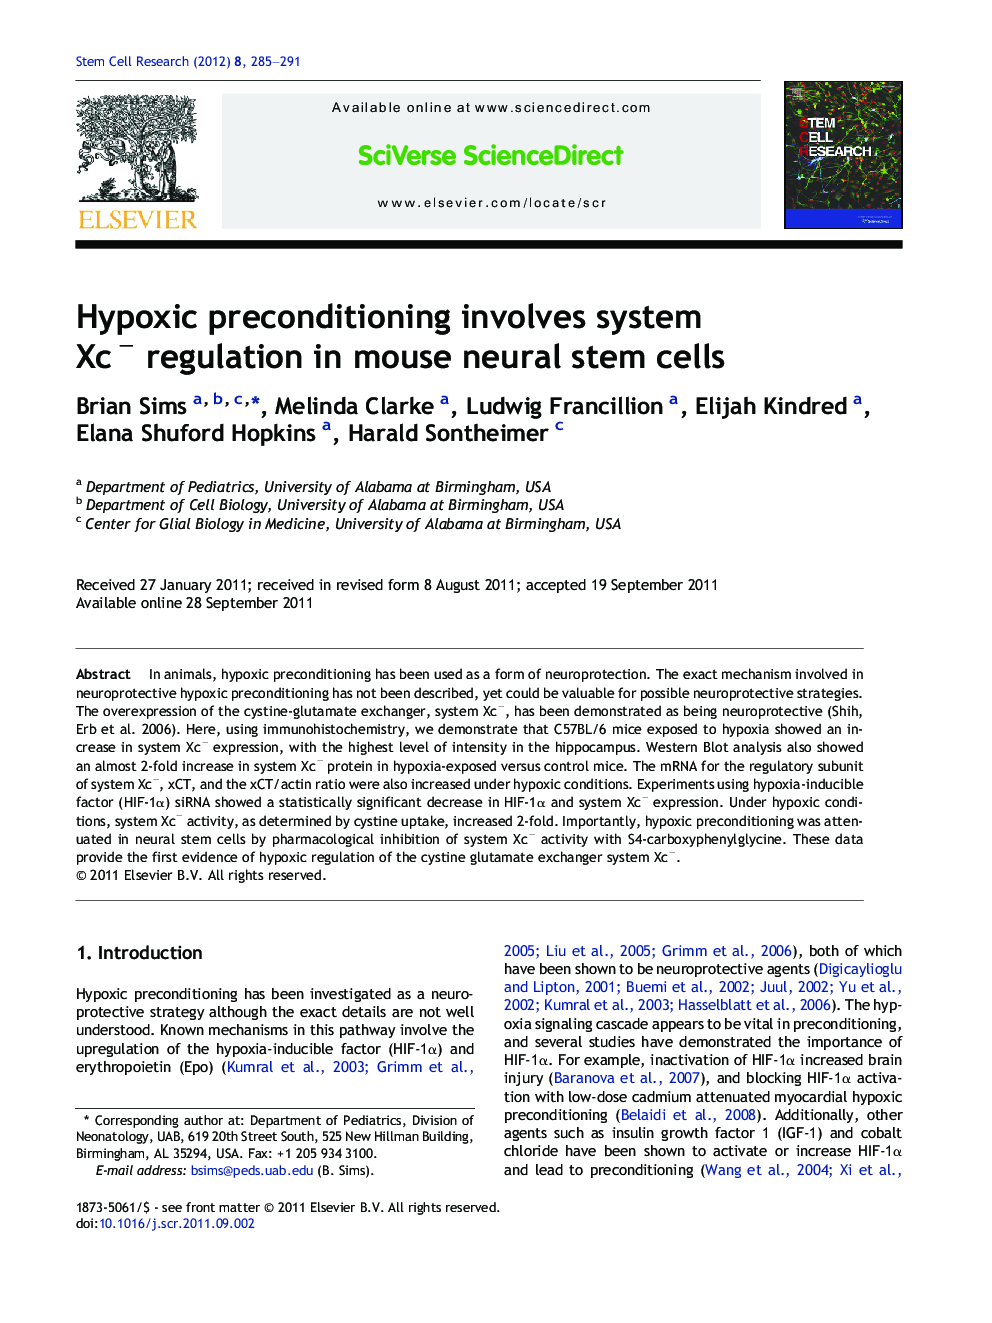 Hypoxic preconditioning involves system Xcâ regulation in mouse neural stem cells